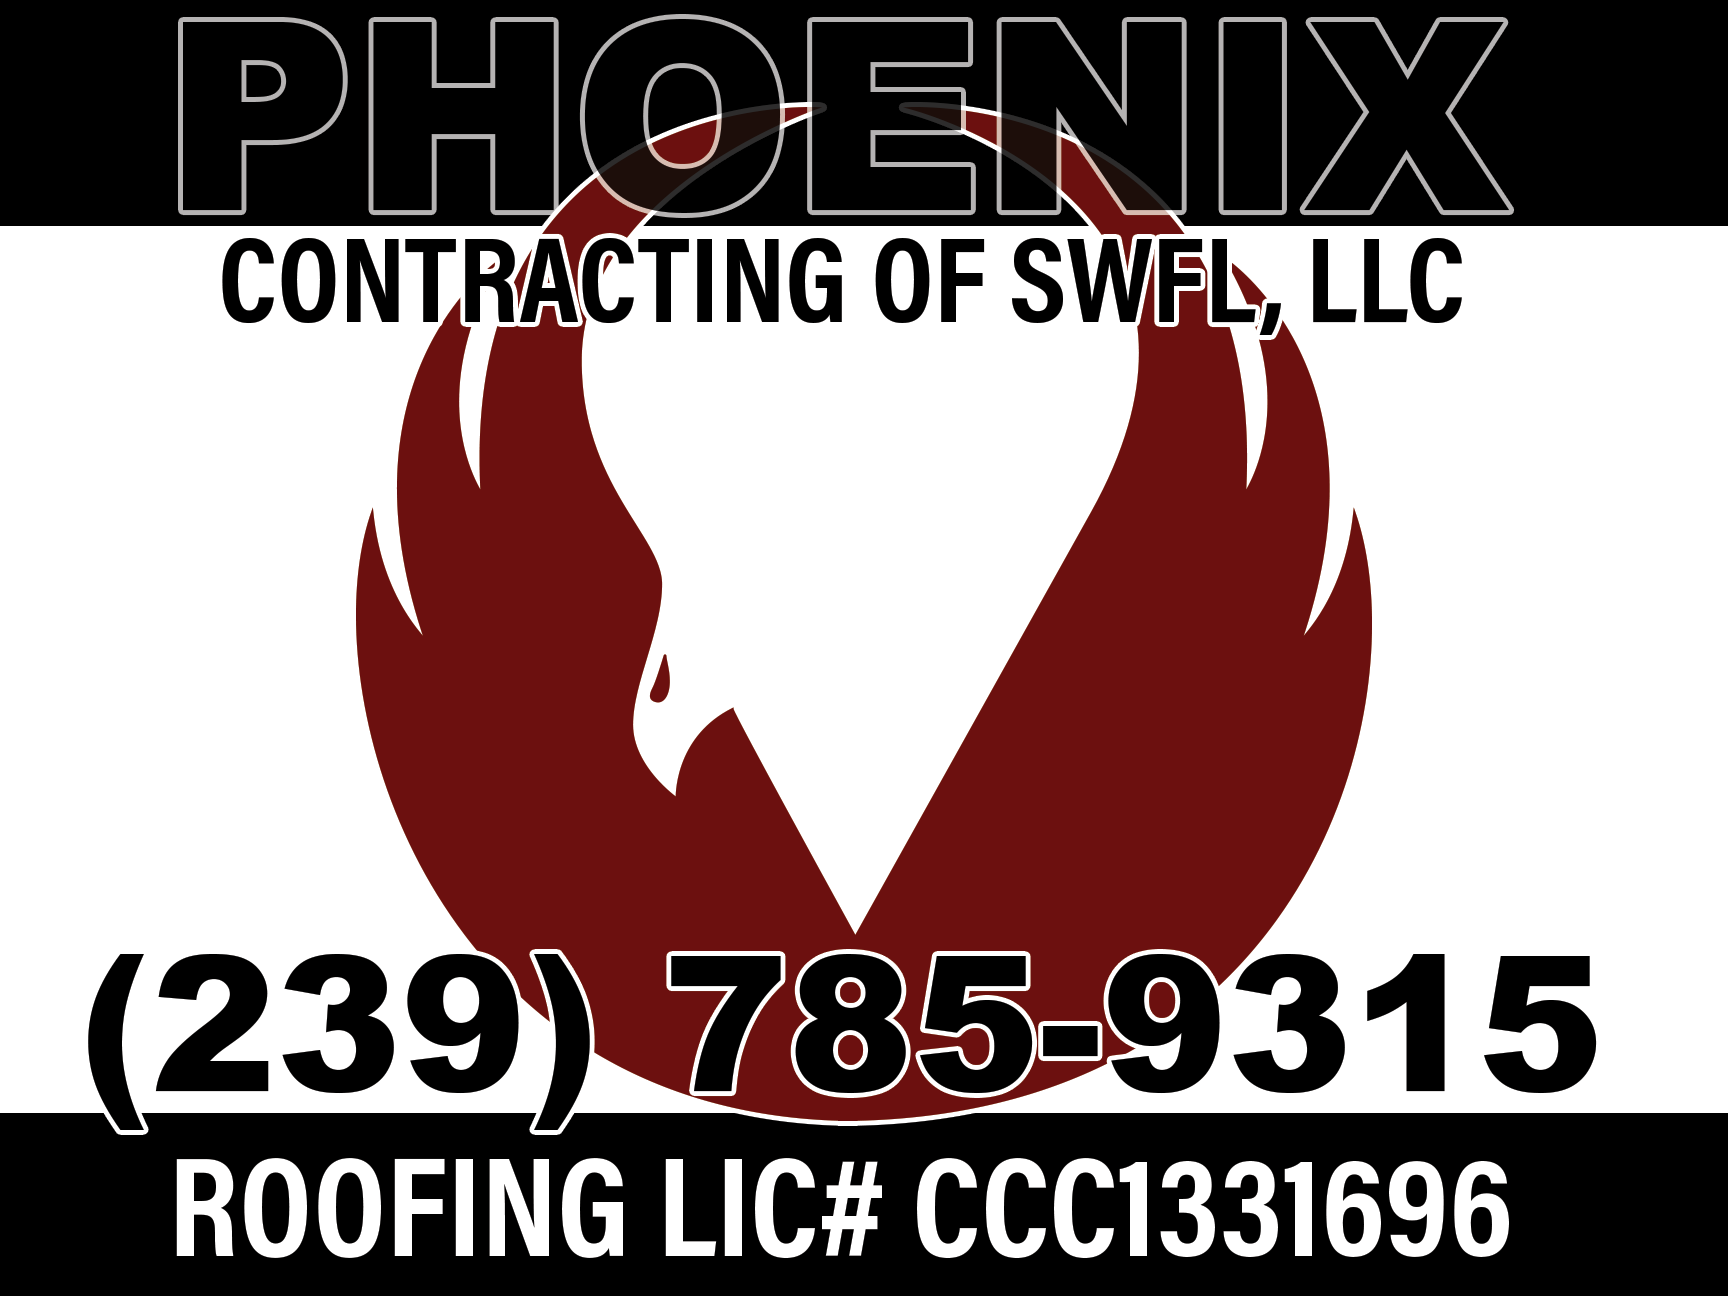 Phoenix Contracting of SWFL, LLC Logo